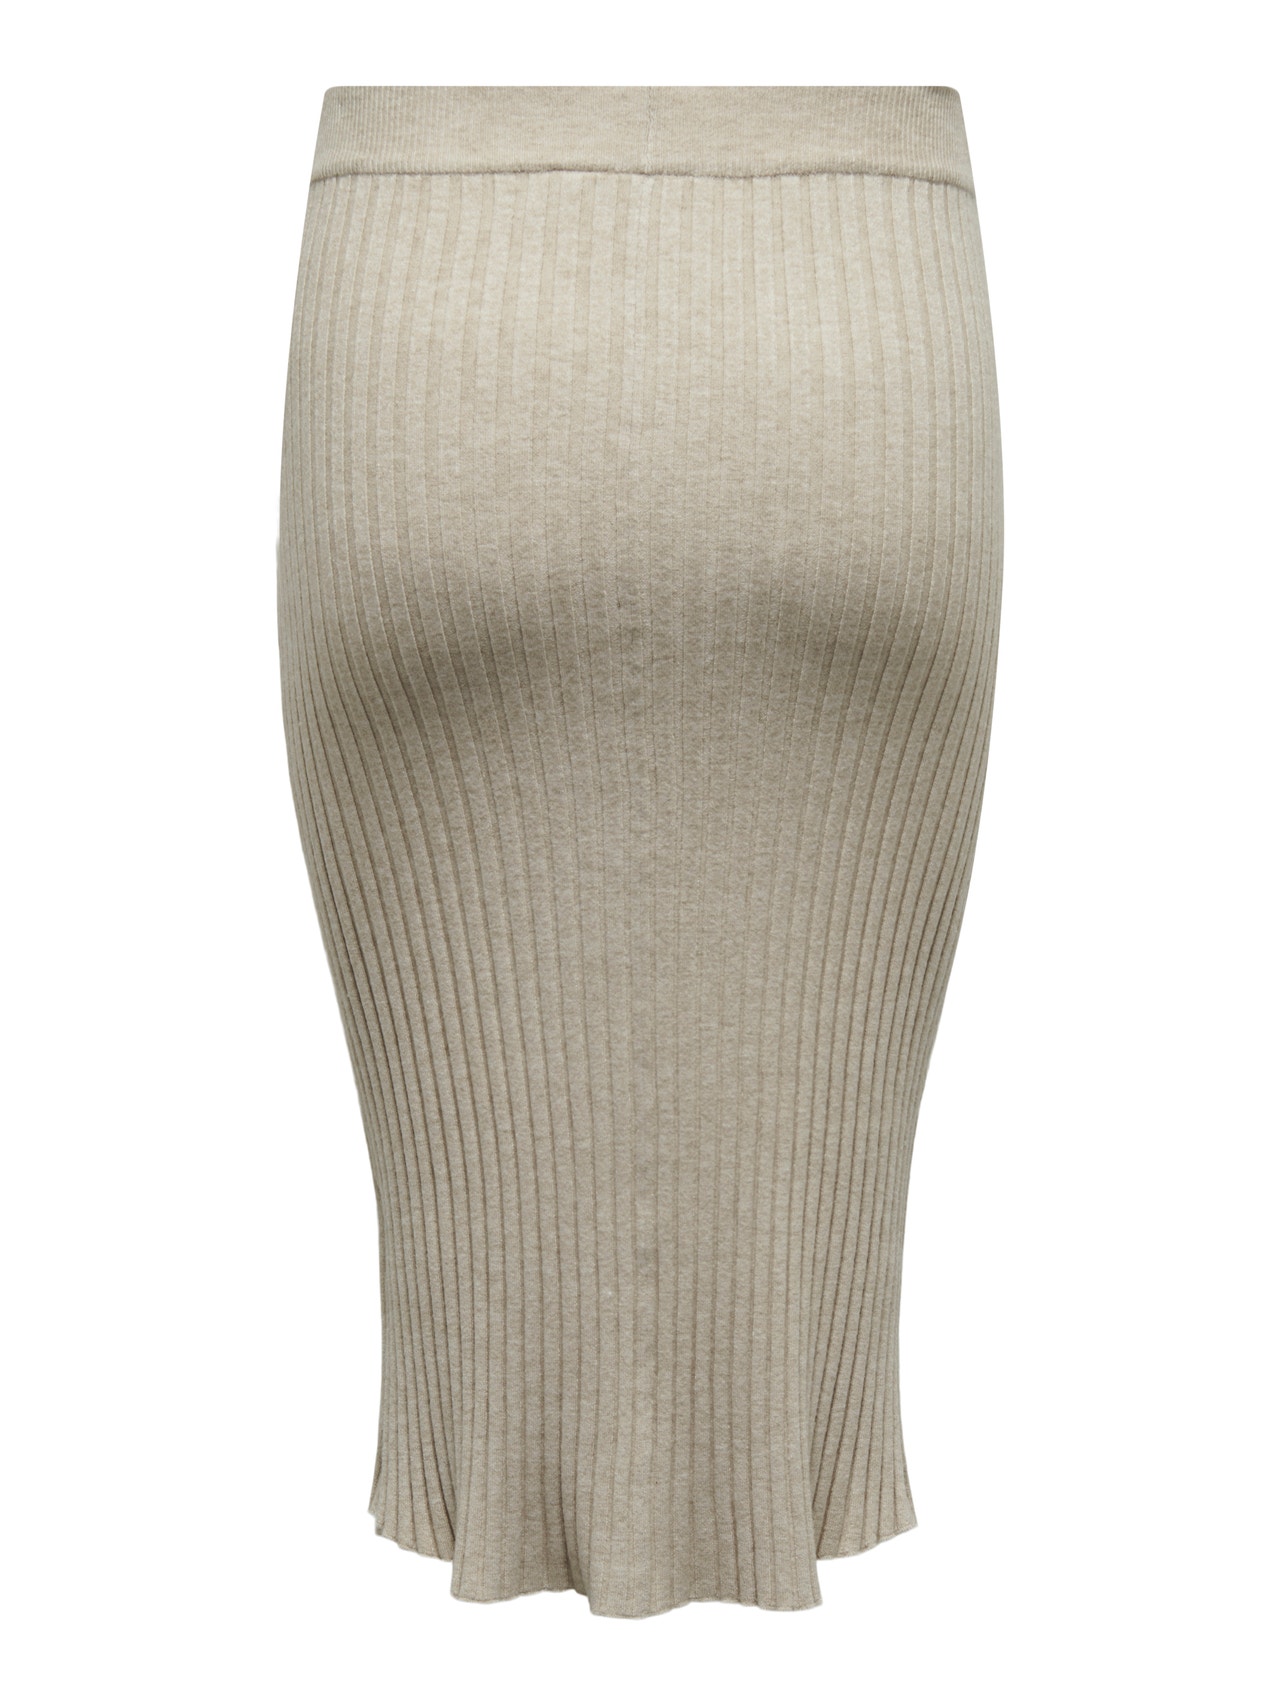 ONLY Curvy midi knit skirt -Weathered Teak - 15307371